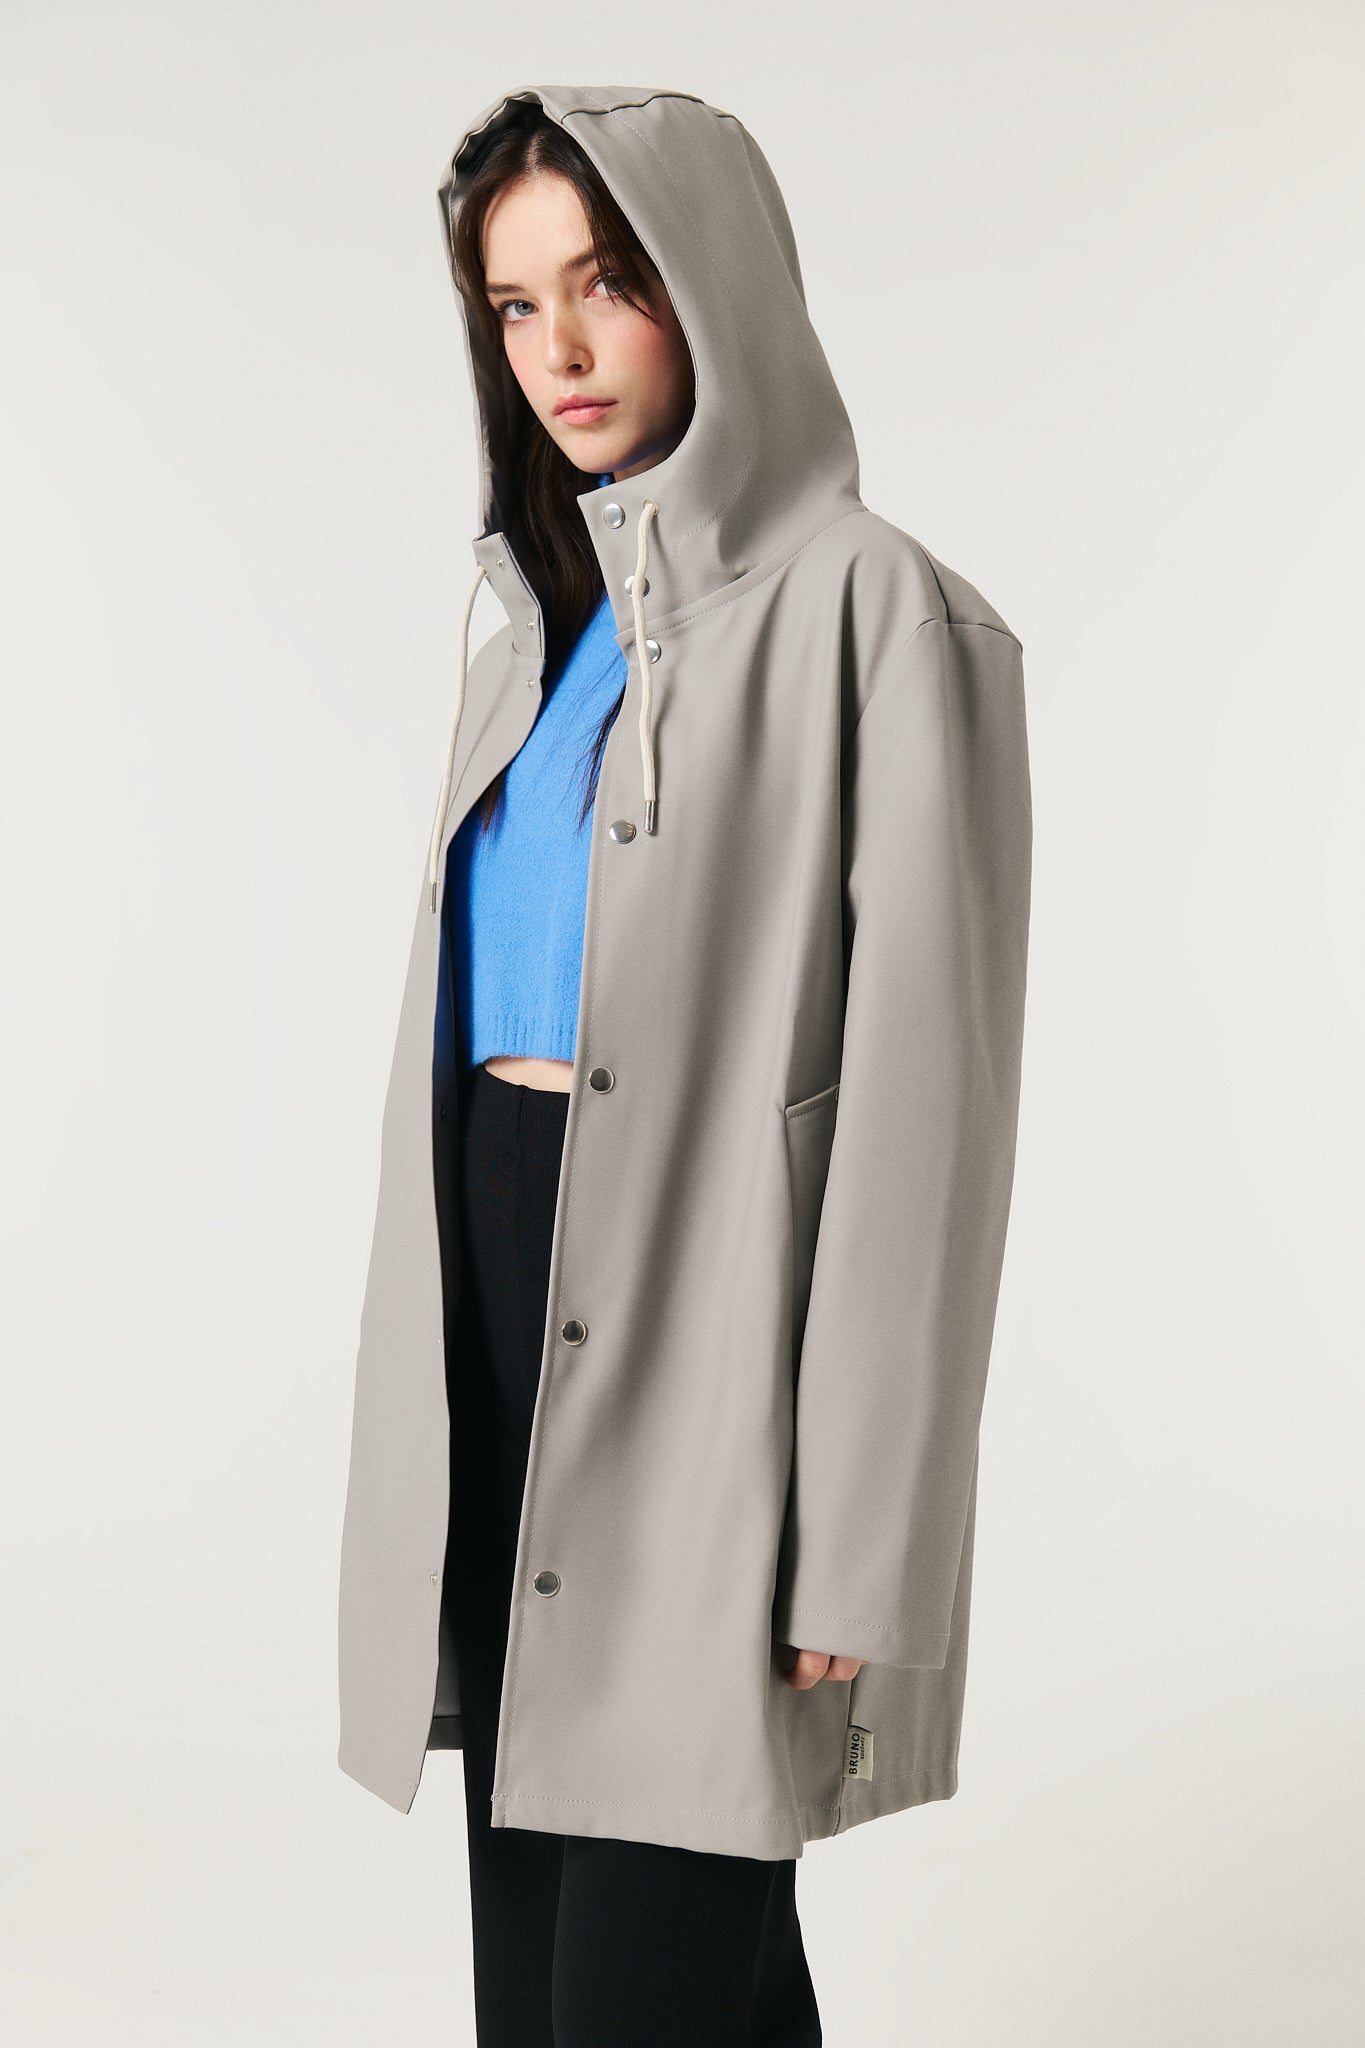 Matchy Raincoat - Gray